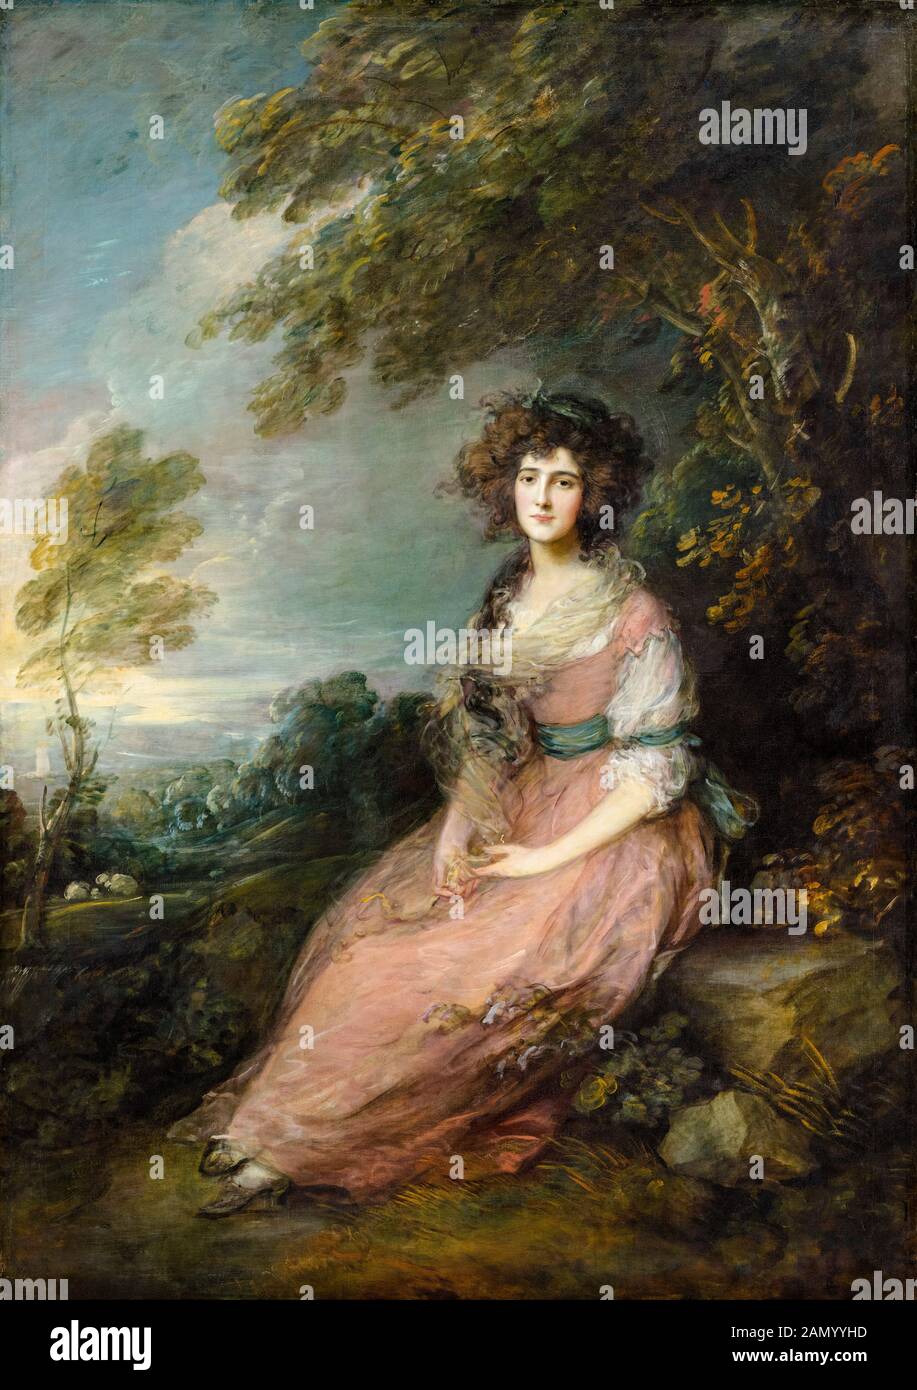 Thomas Gainsborough, Mrs Richard Brinsley Sheridan, portrait painting, 1787 Stock Photo